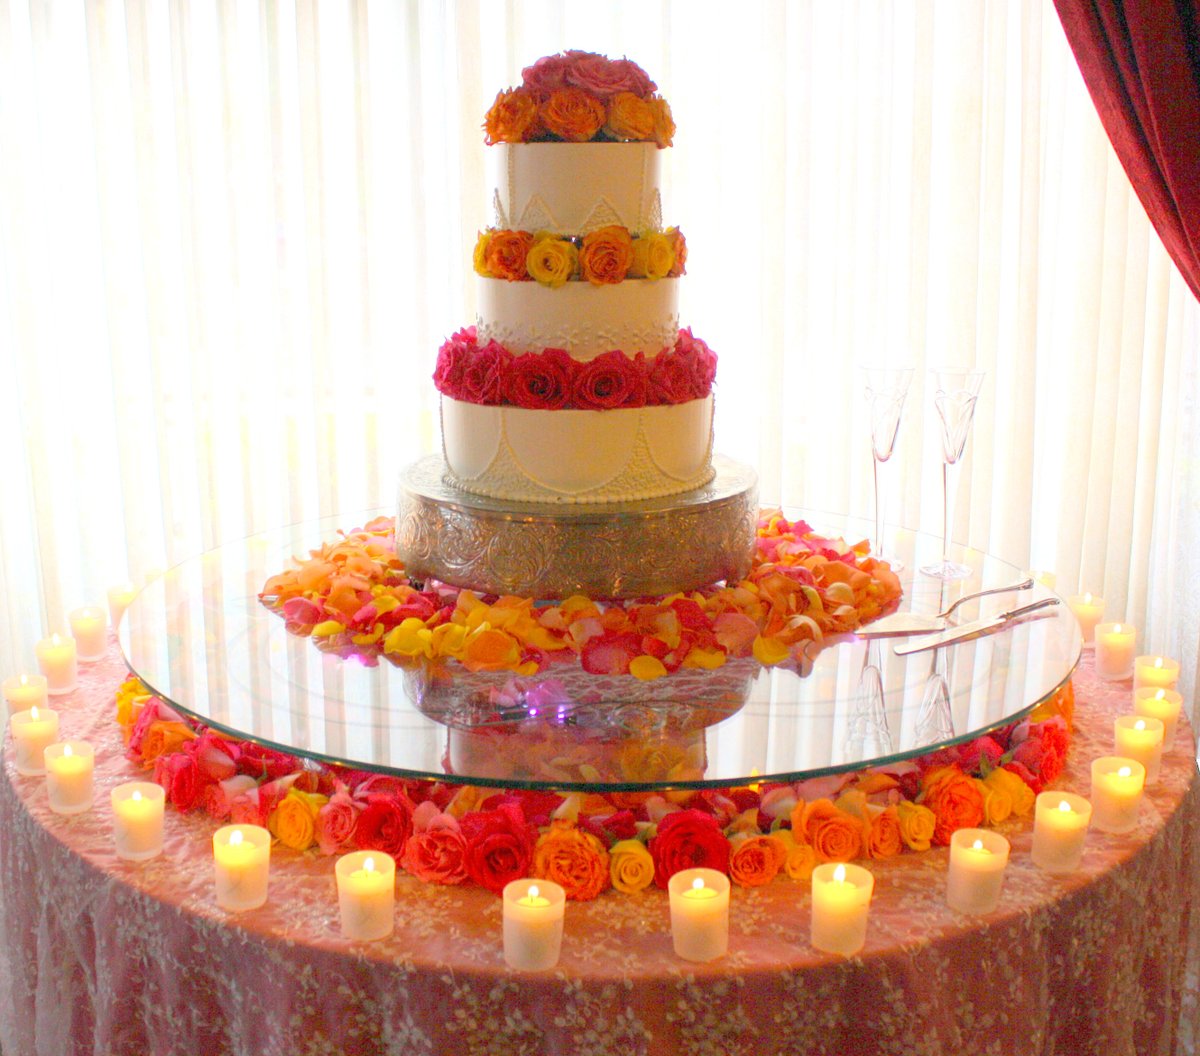 We love creating cake table showpieces, especially when the lighting is on point!
#driskillcakes #bestofbastrop #buyitinbastrop #cakedisplay #weddingcakeflowers